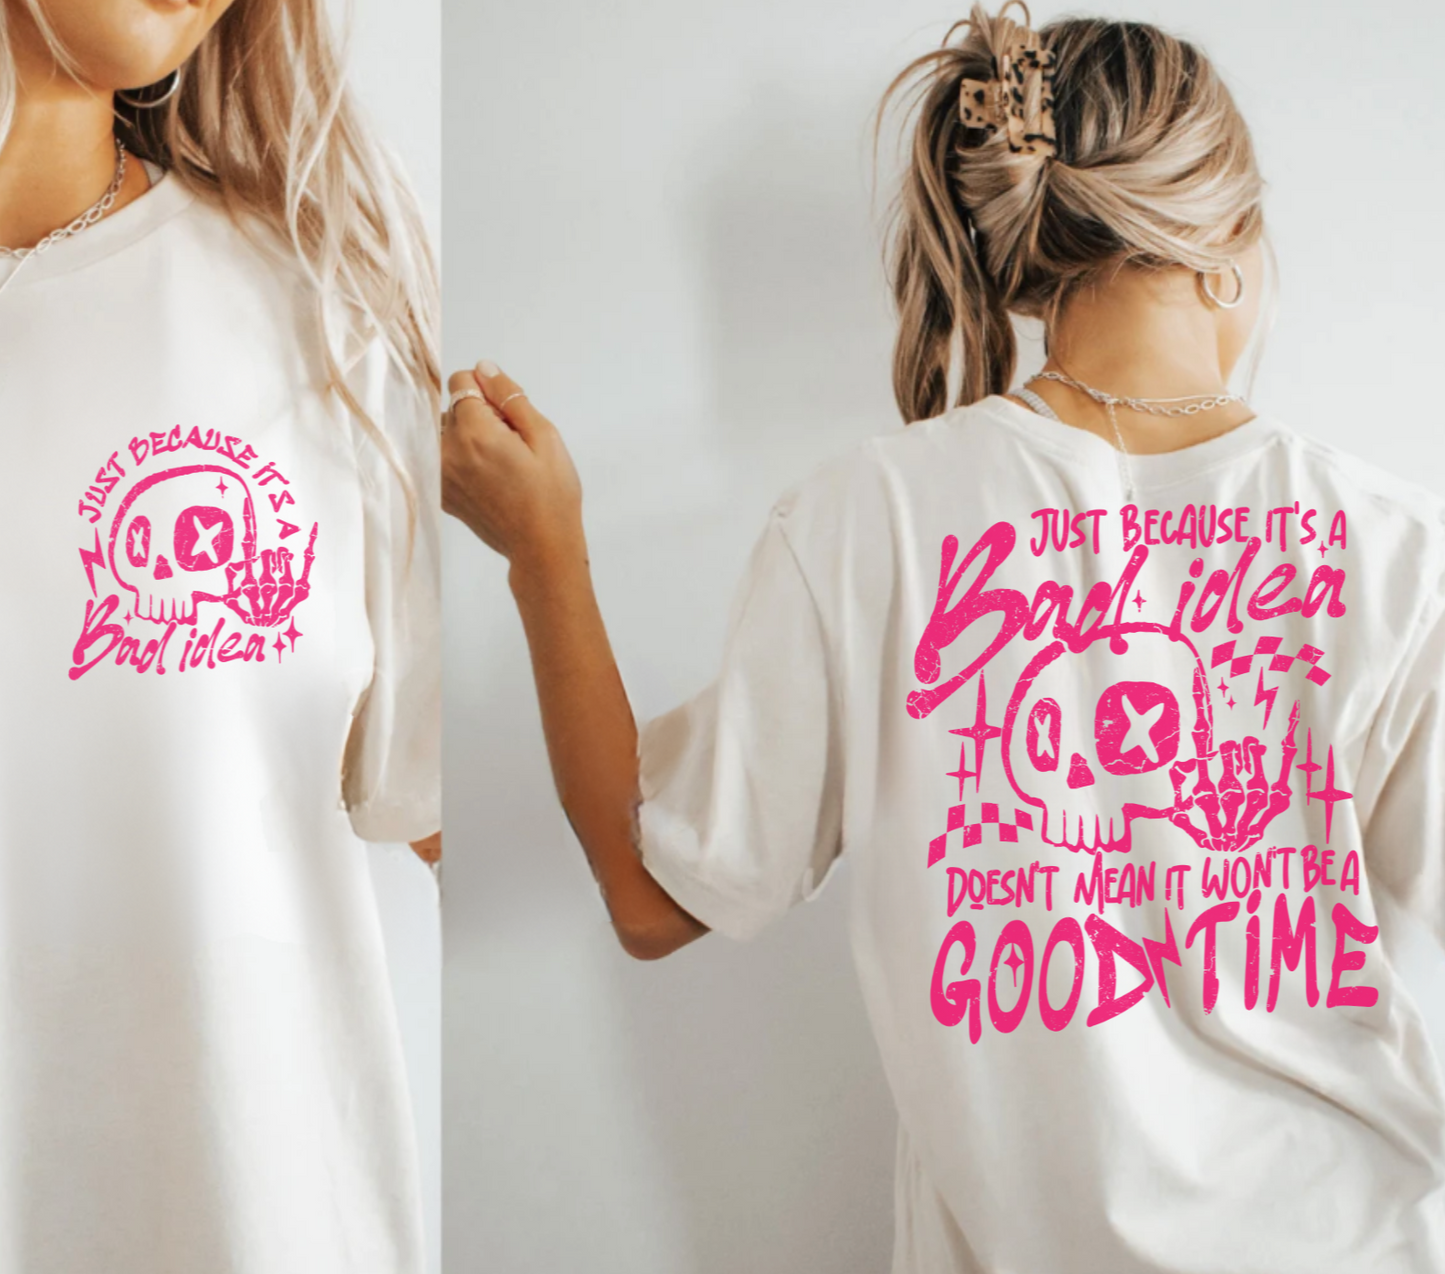 Bad Idea, Good Time T-Shirt